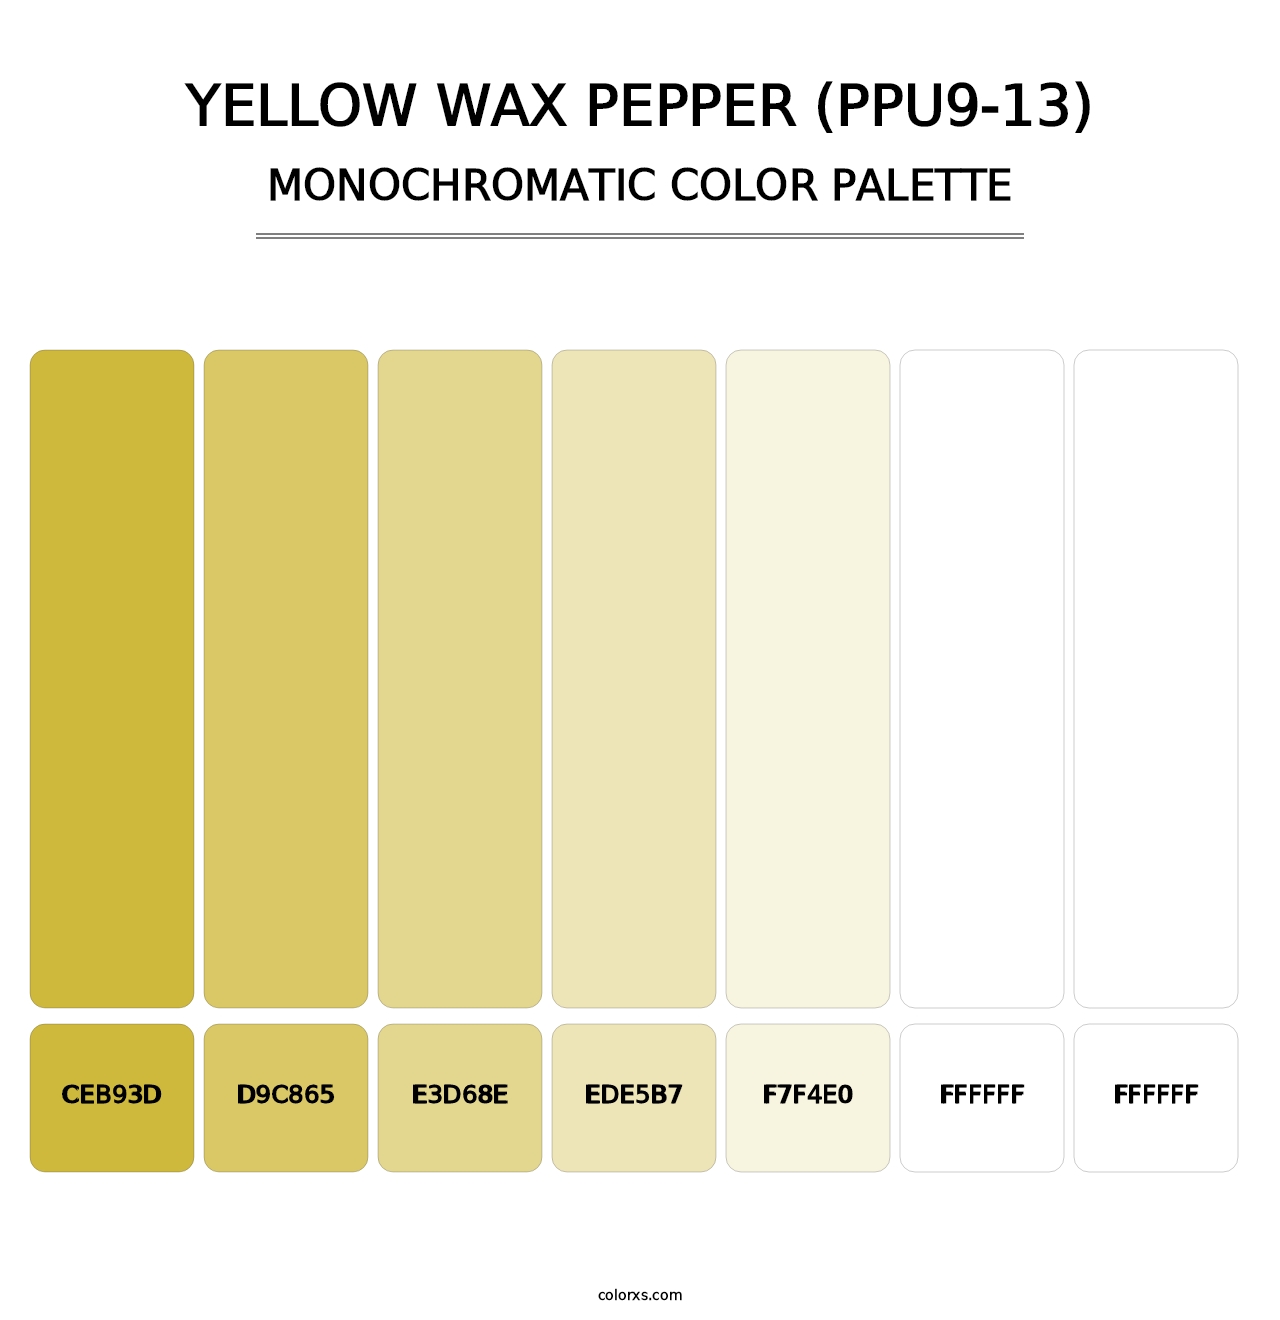 Yellow Wax Pepper (PPU9-13) - Monochromatic Color Palette